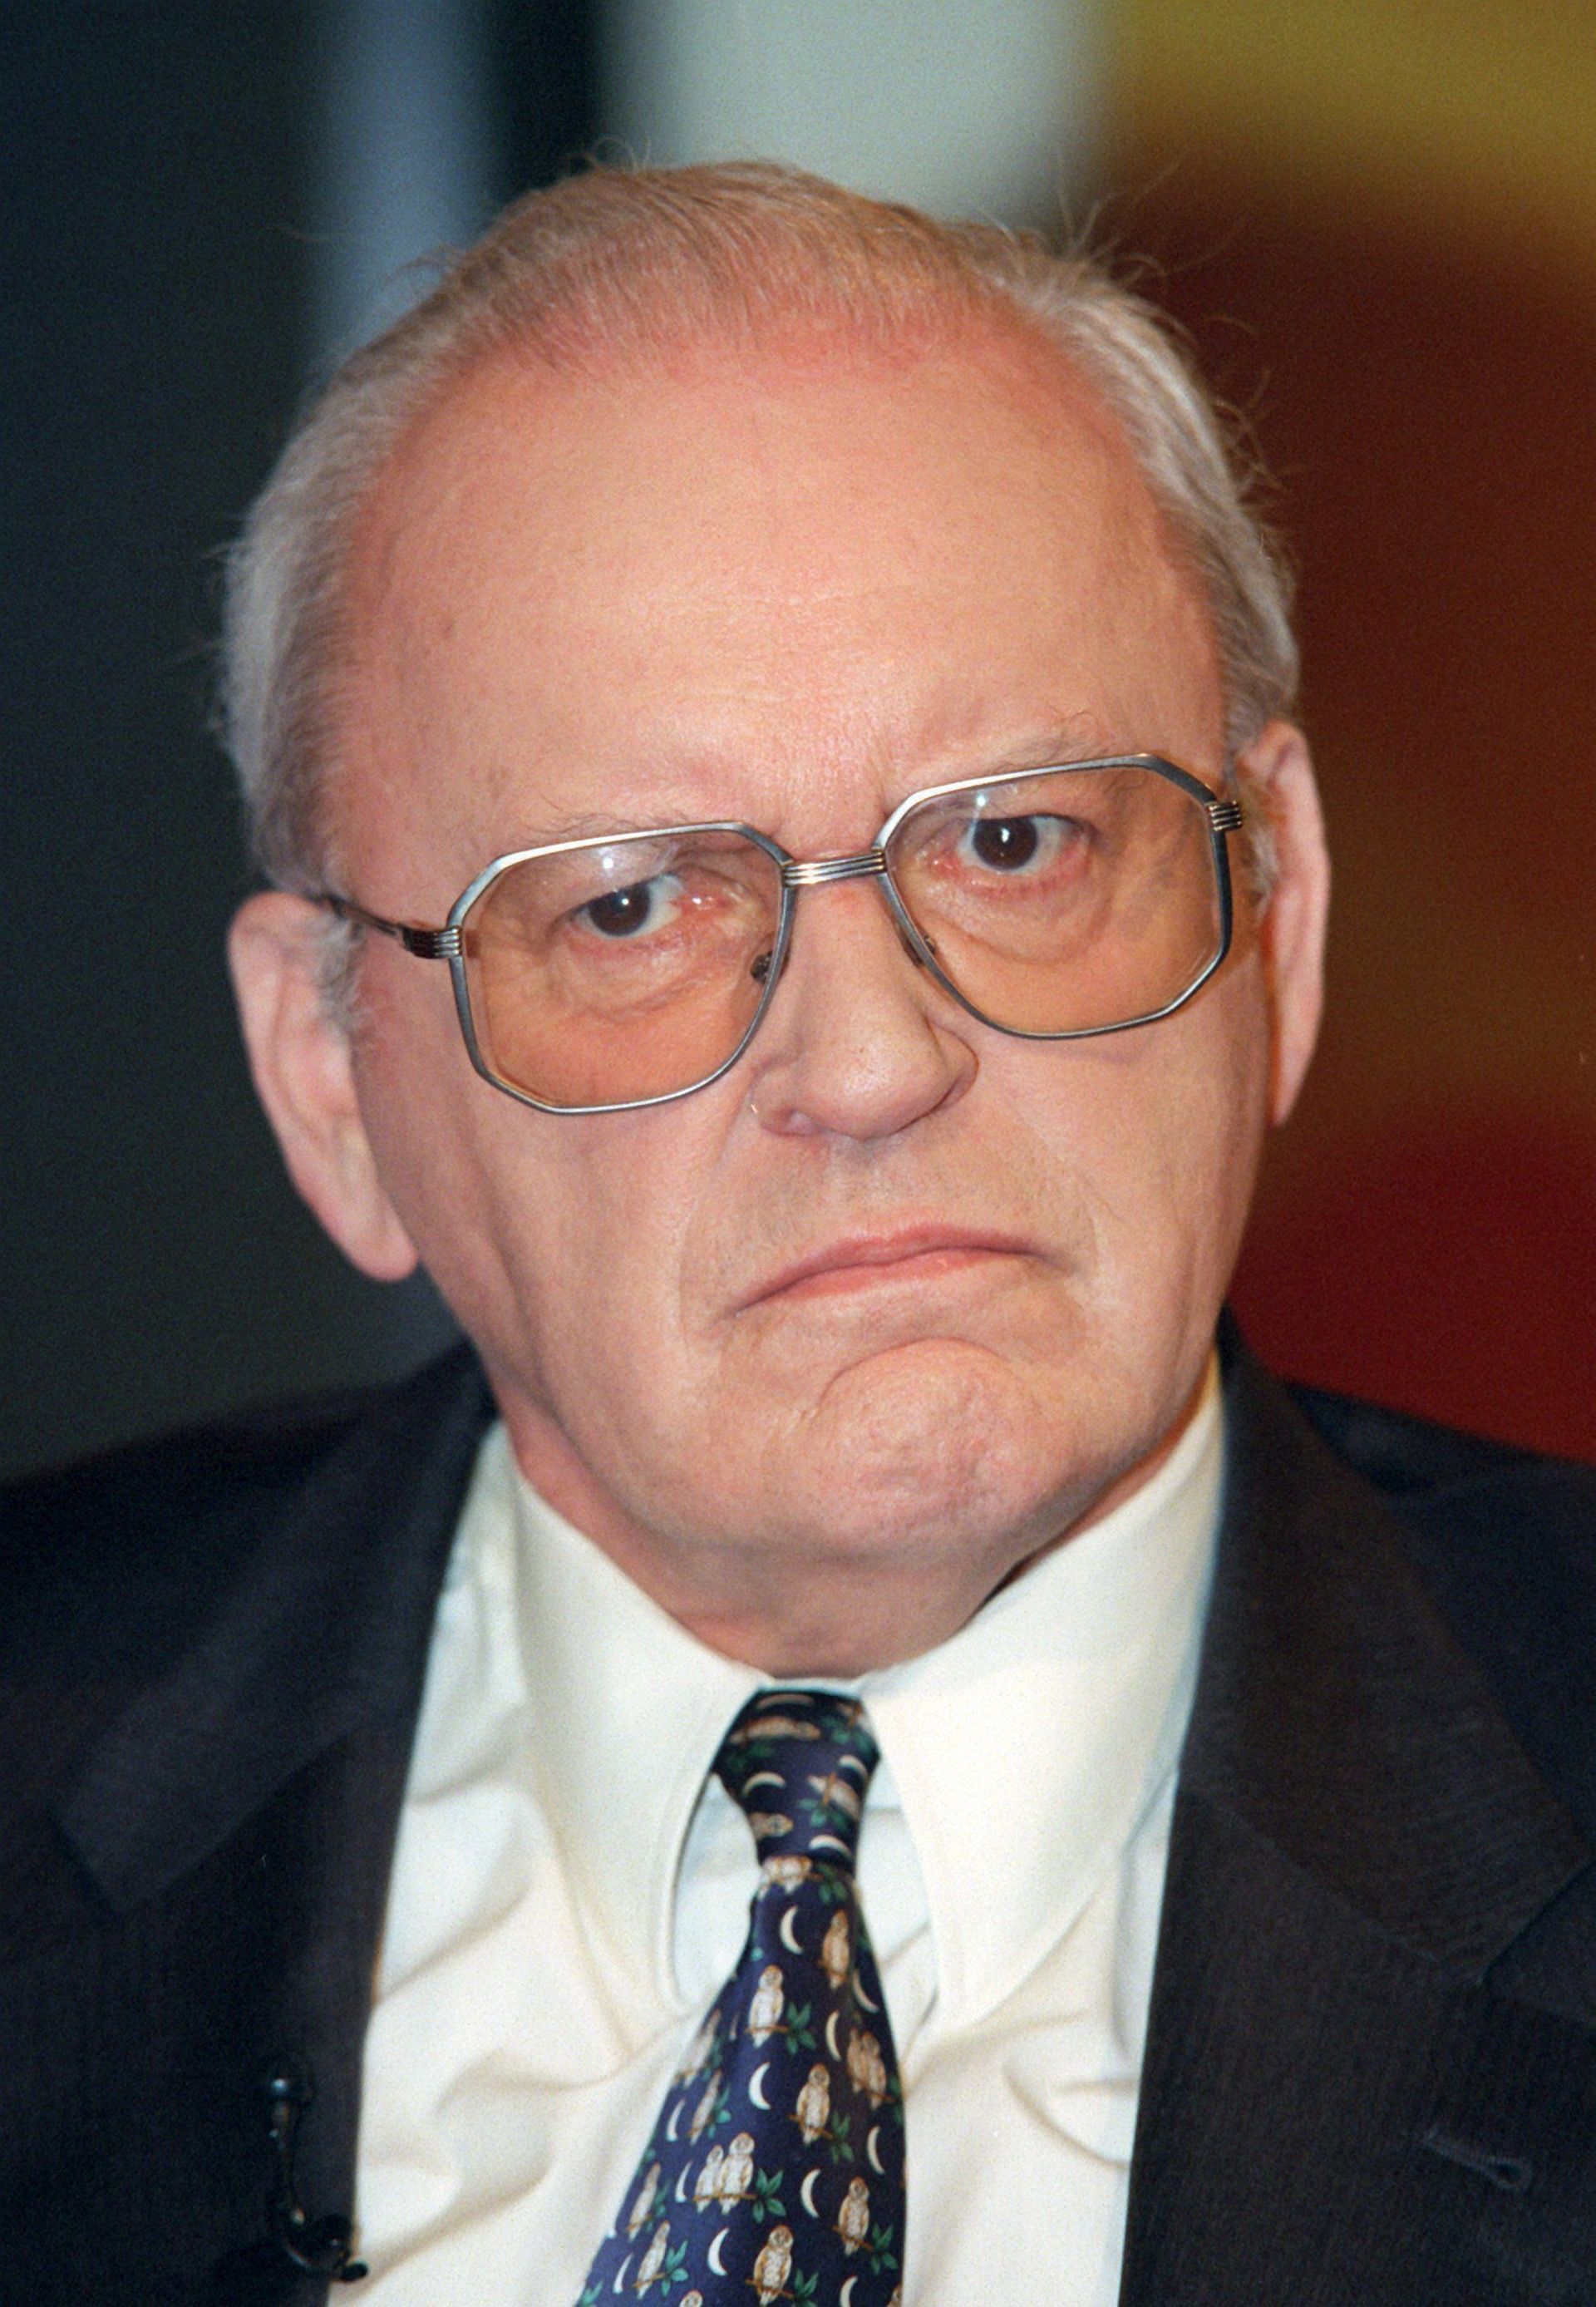 Preminuo bivši njemački predsjednik Roman Herzog